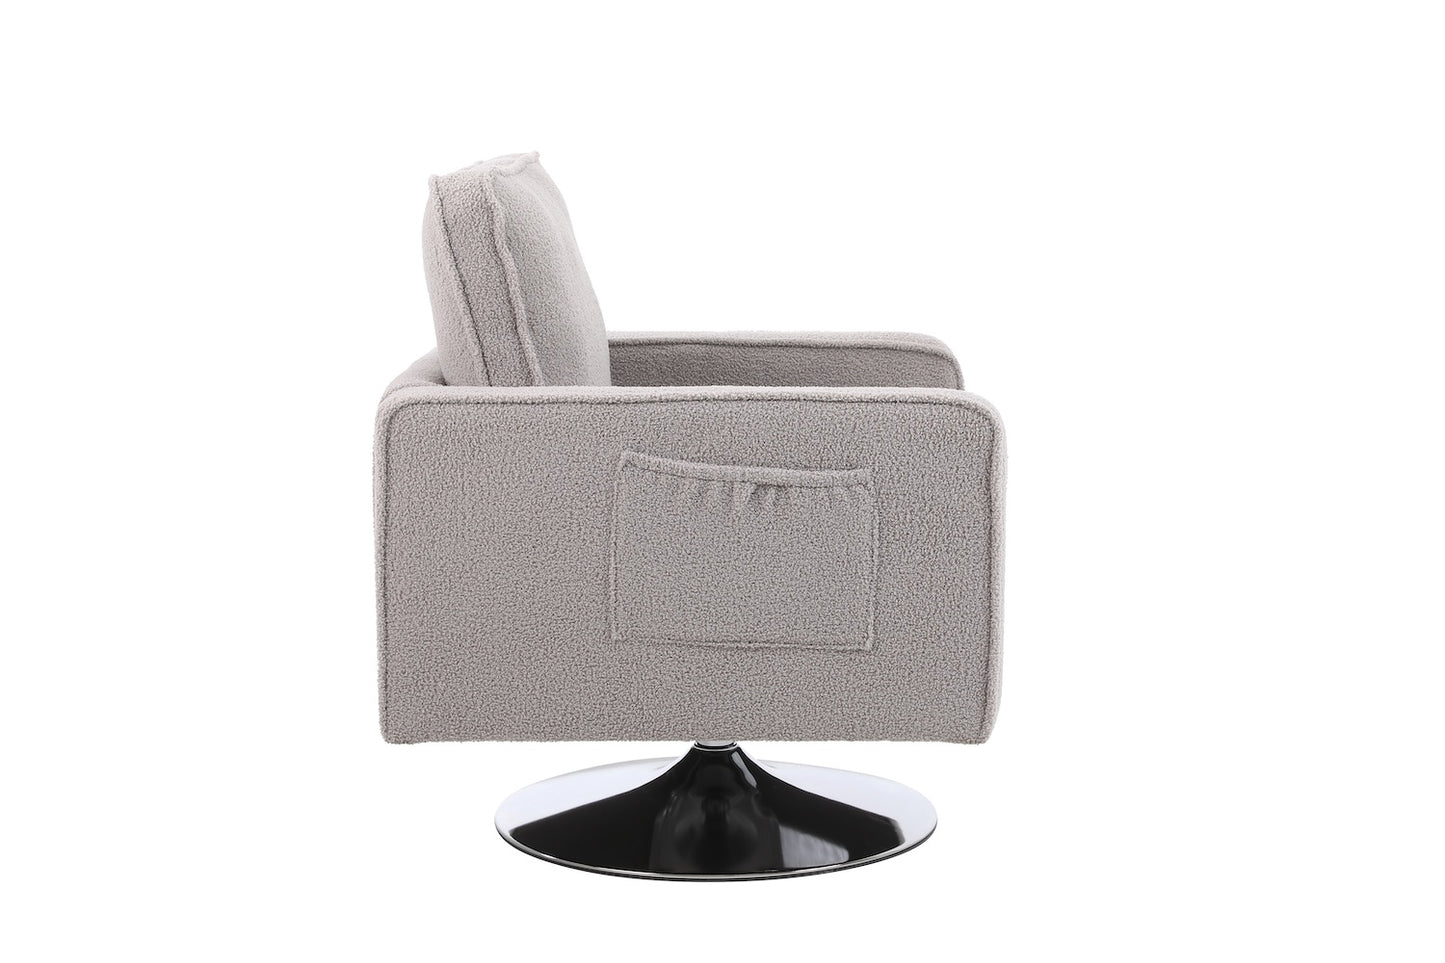 Haifa Modern Swivel Accent Chair in Teddy Upholstery - Gray